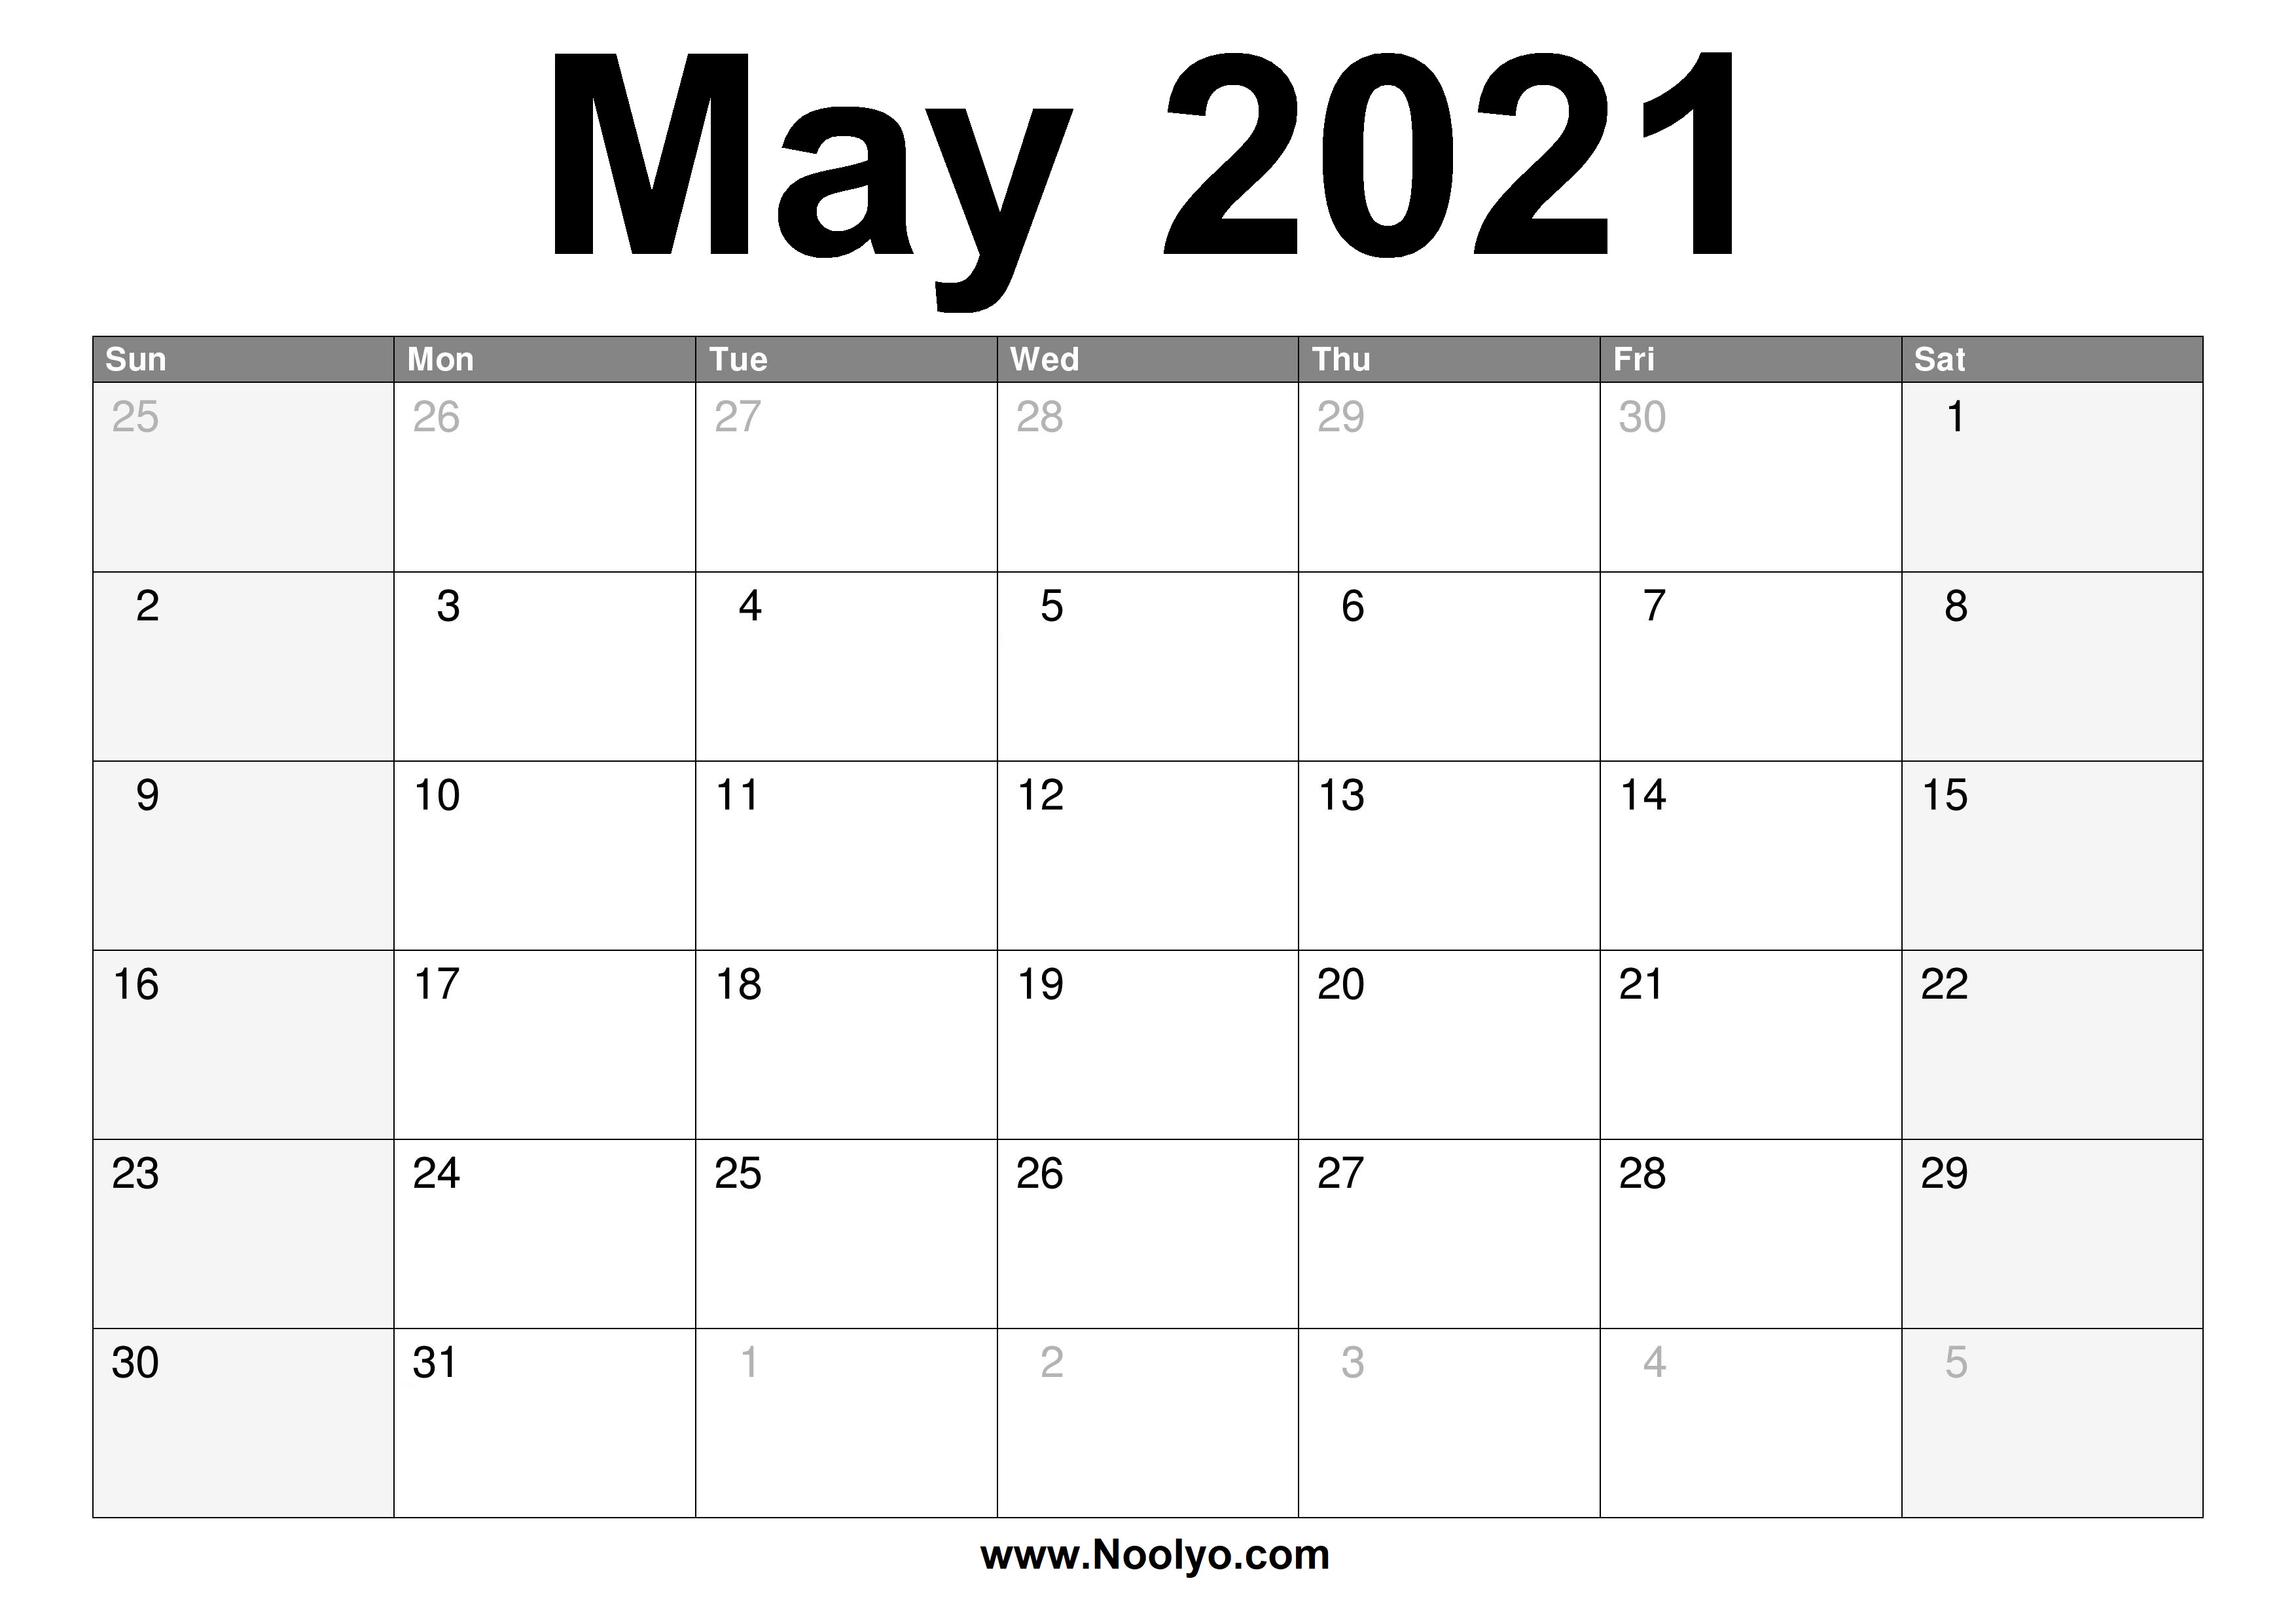 Календарь на май 2021. Календарь май. Май 2021. Календарь 2021. Календарь май 2021 года.